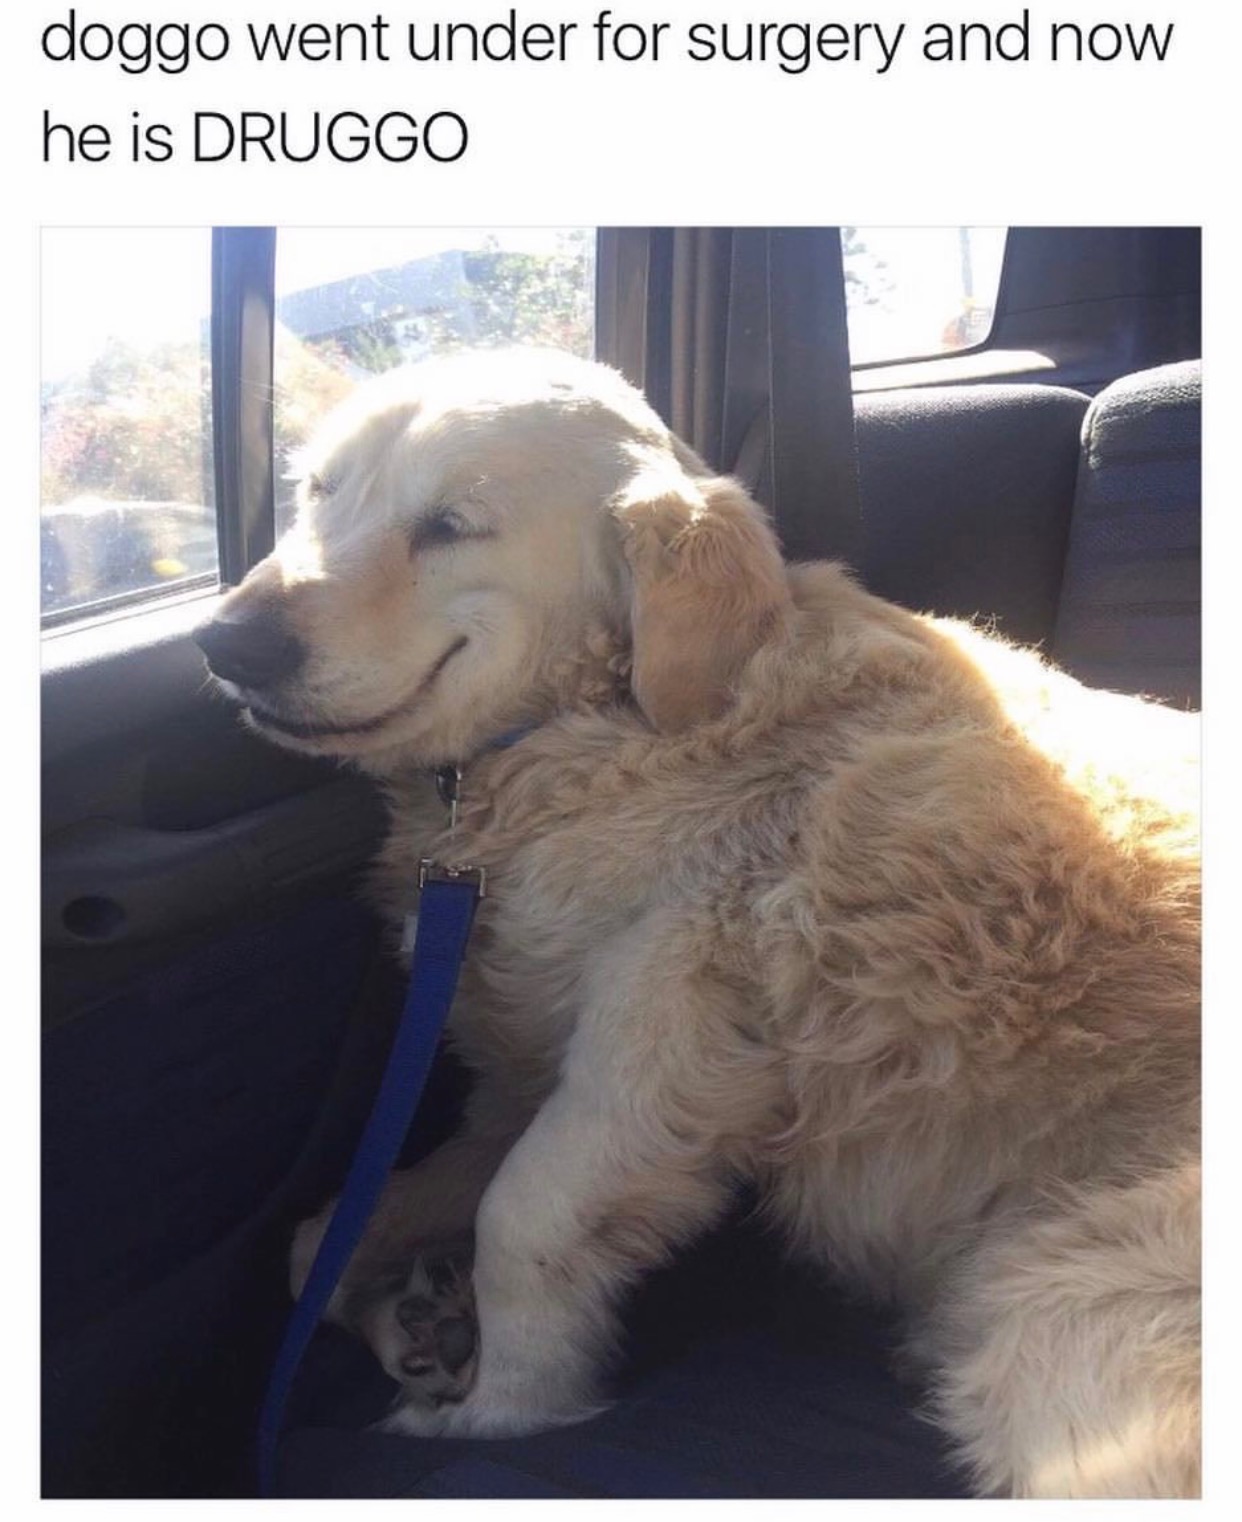 memes - doggo memes - doggo went under for surgery and now he is Druggo